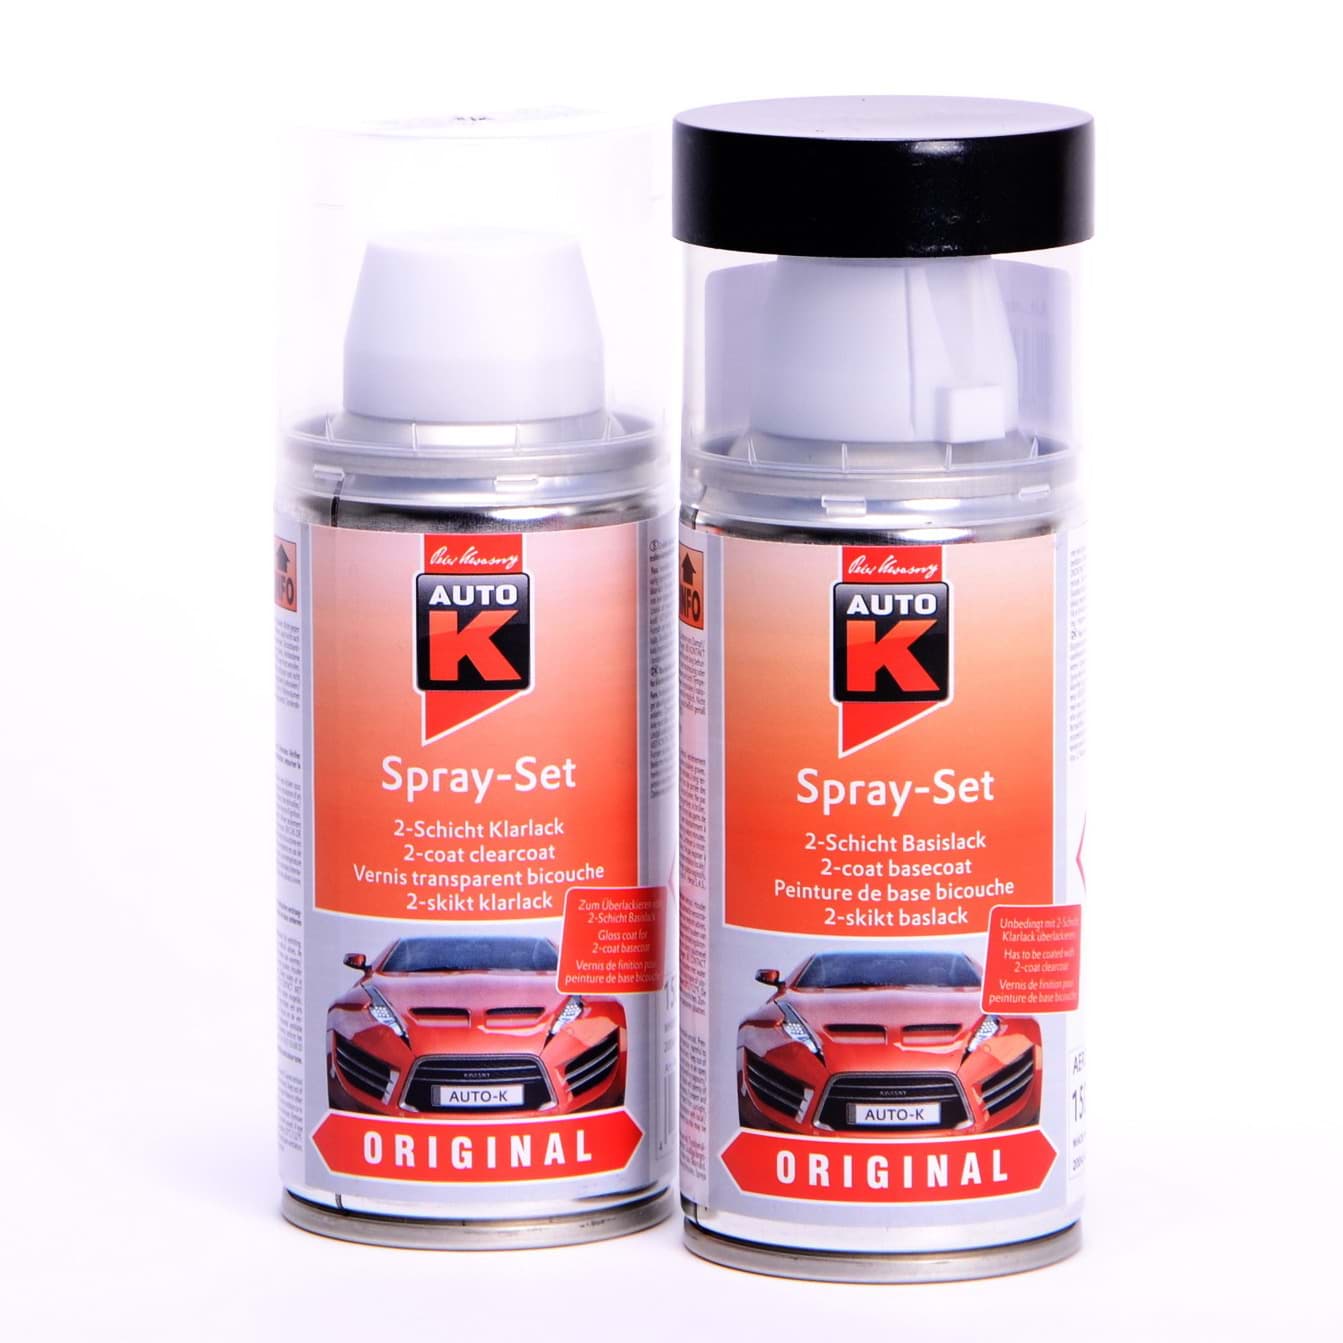 Afbeelding van Auto-K Spray-Set Autolack für Volkswagen, VW, Audi LZ5L Mingblau perl met 20800